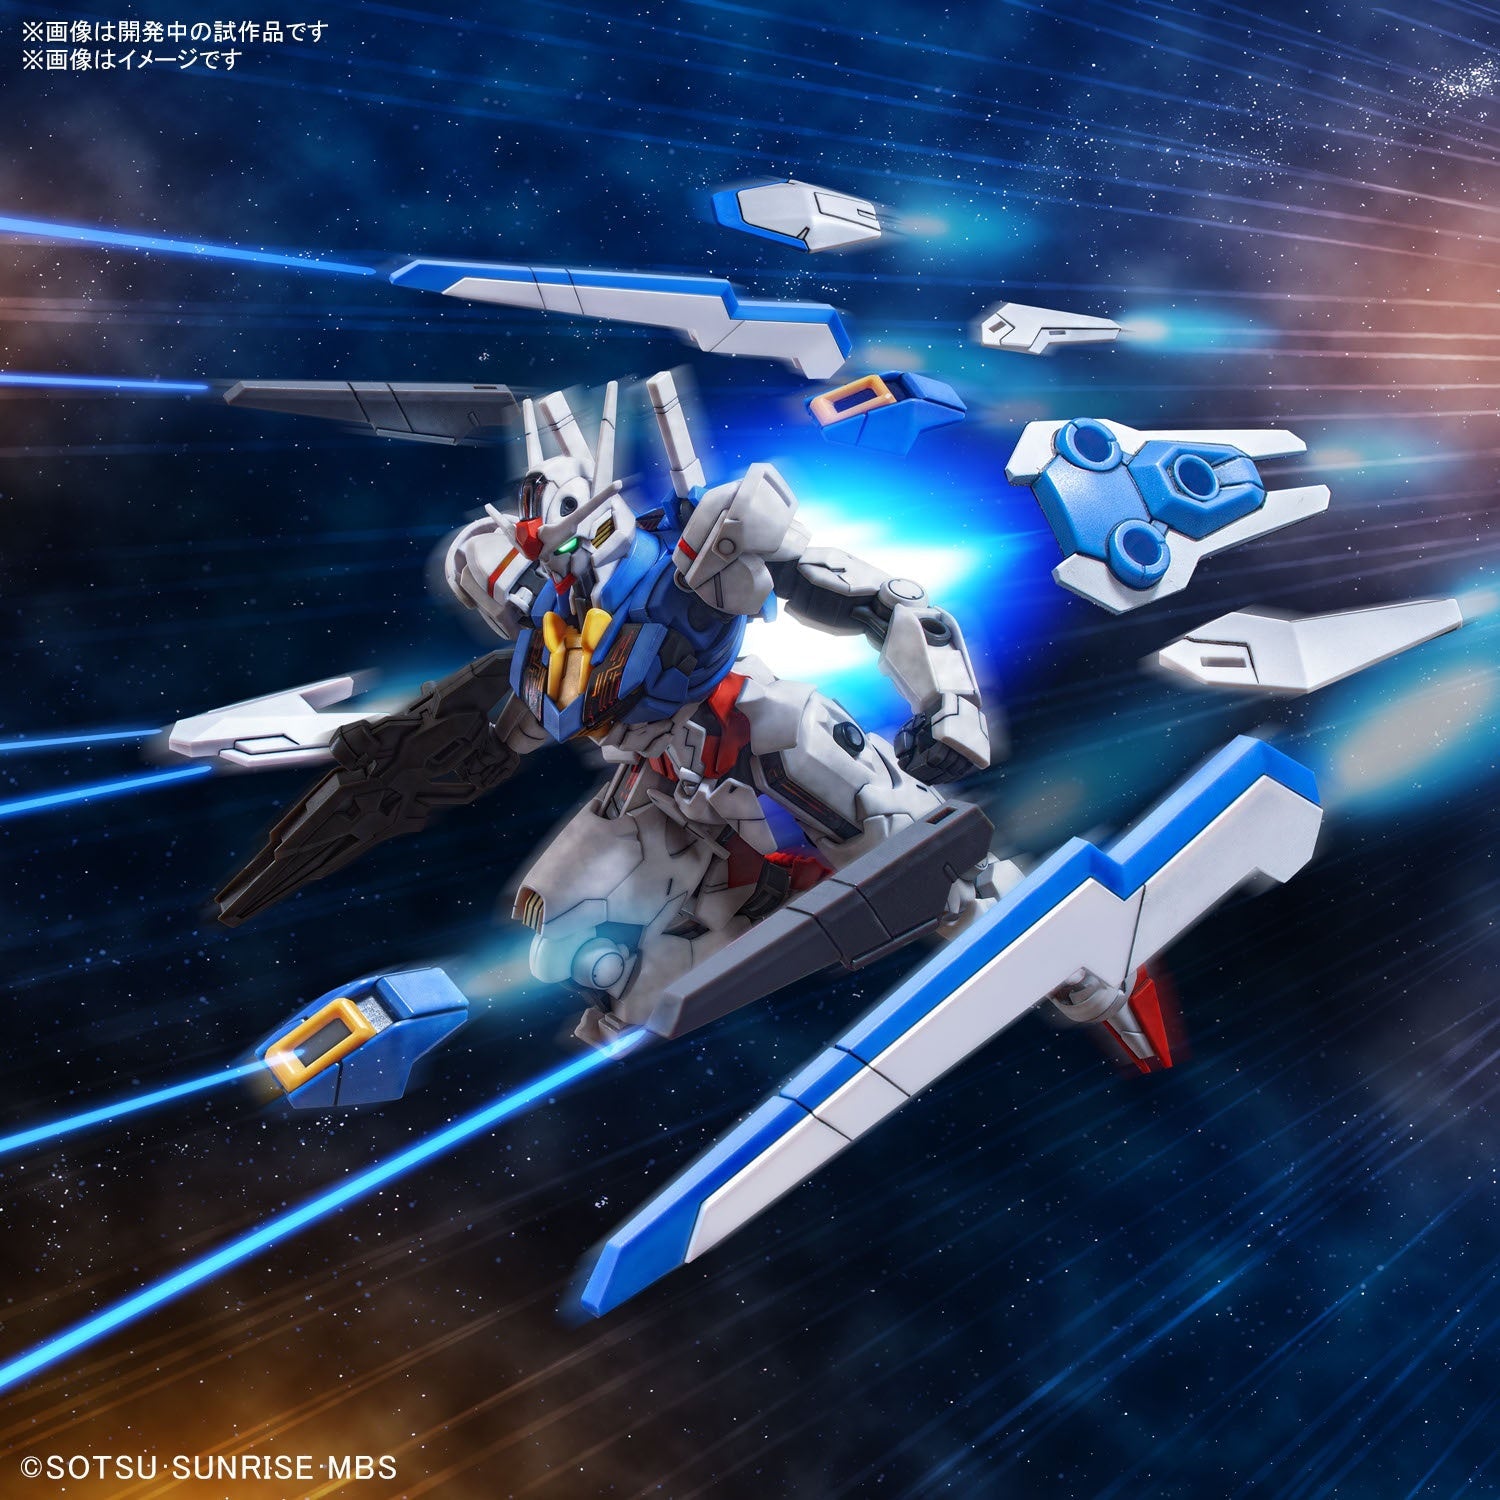 Bandai Hobby - Mobile Suit Gundam: The Witch from Mercury - #03 Gundam  Aerial, Bandai Spirits HG 1/144 Model Kit